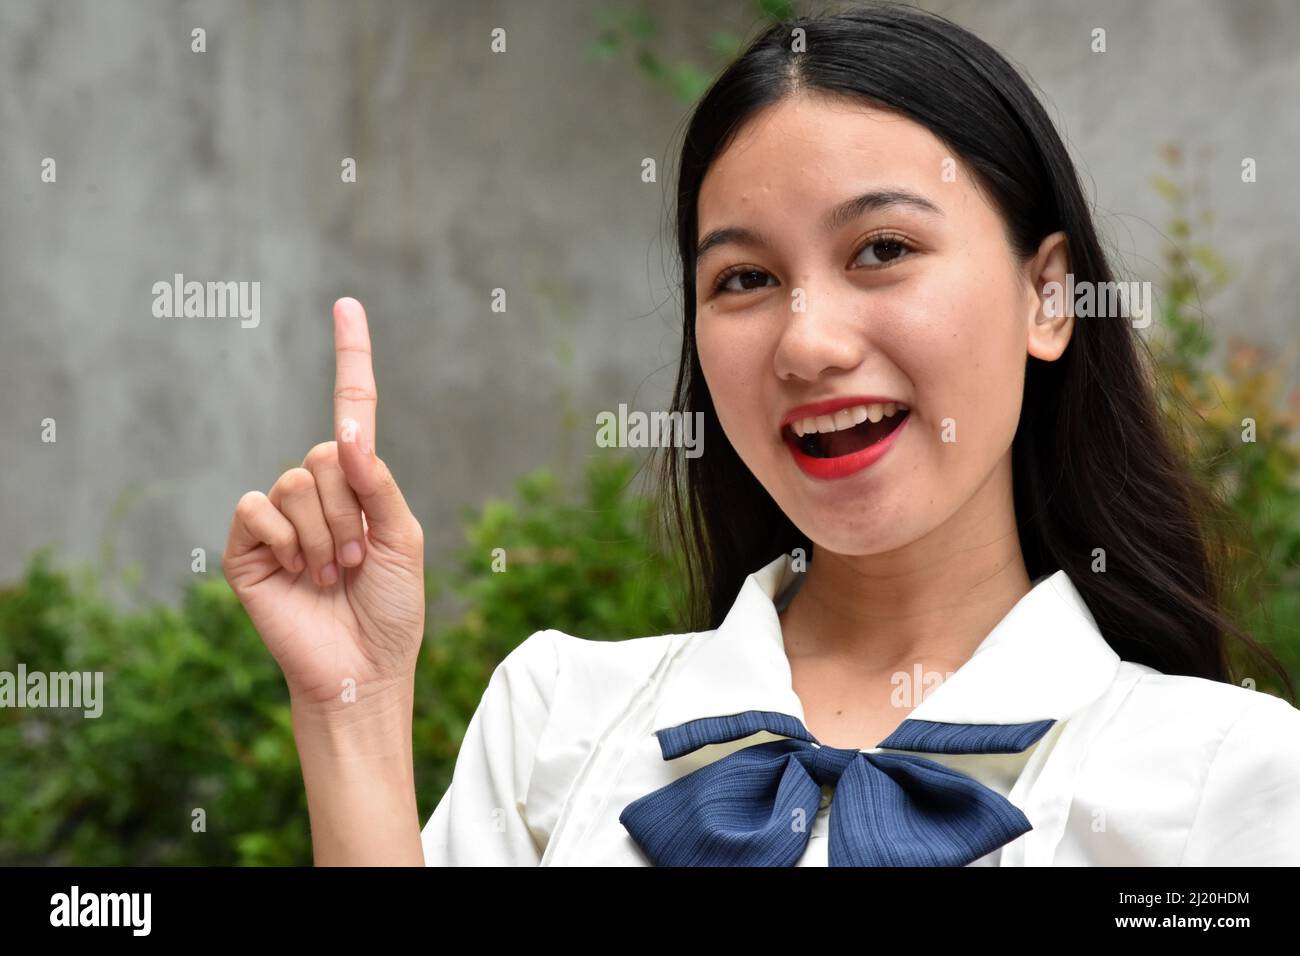 An Asian Woman Having An Idea Stock Photo